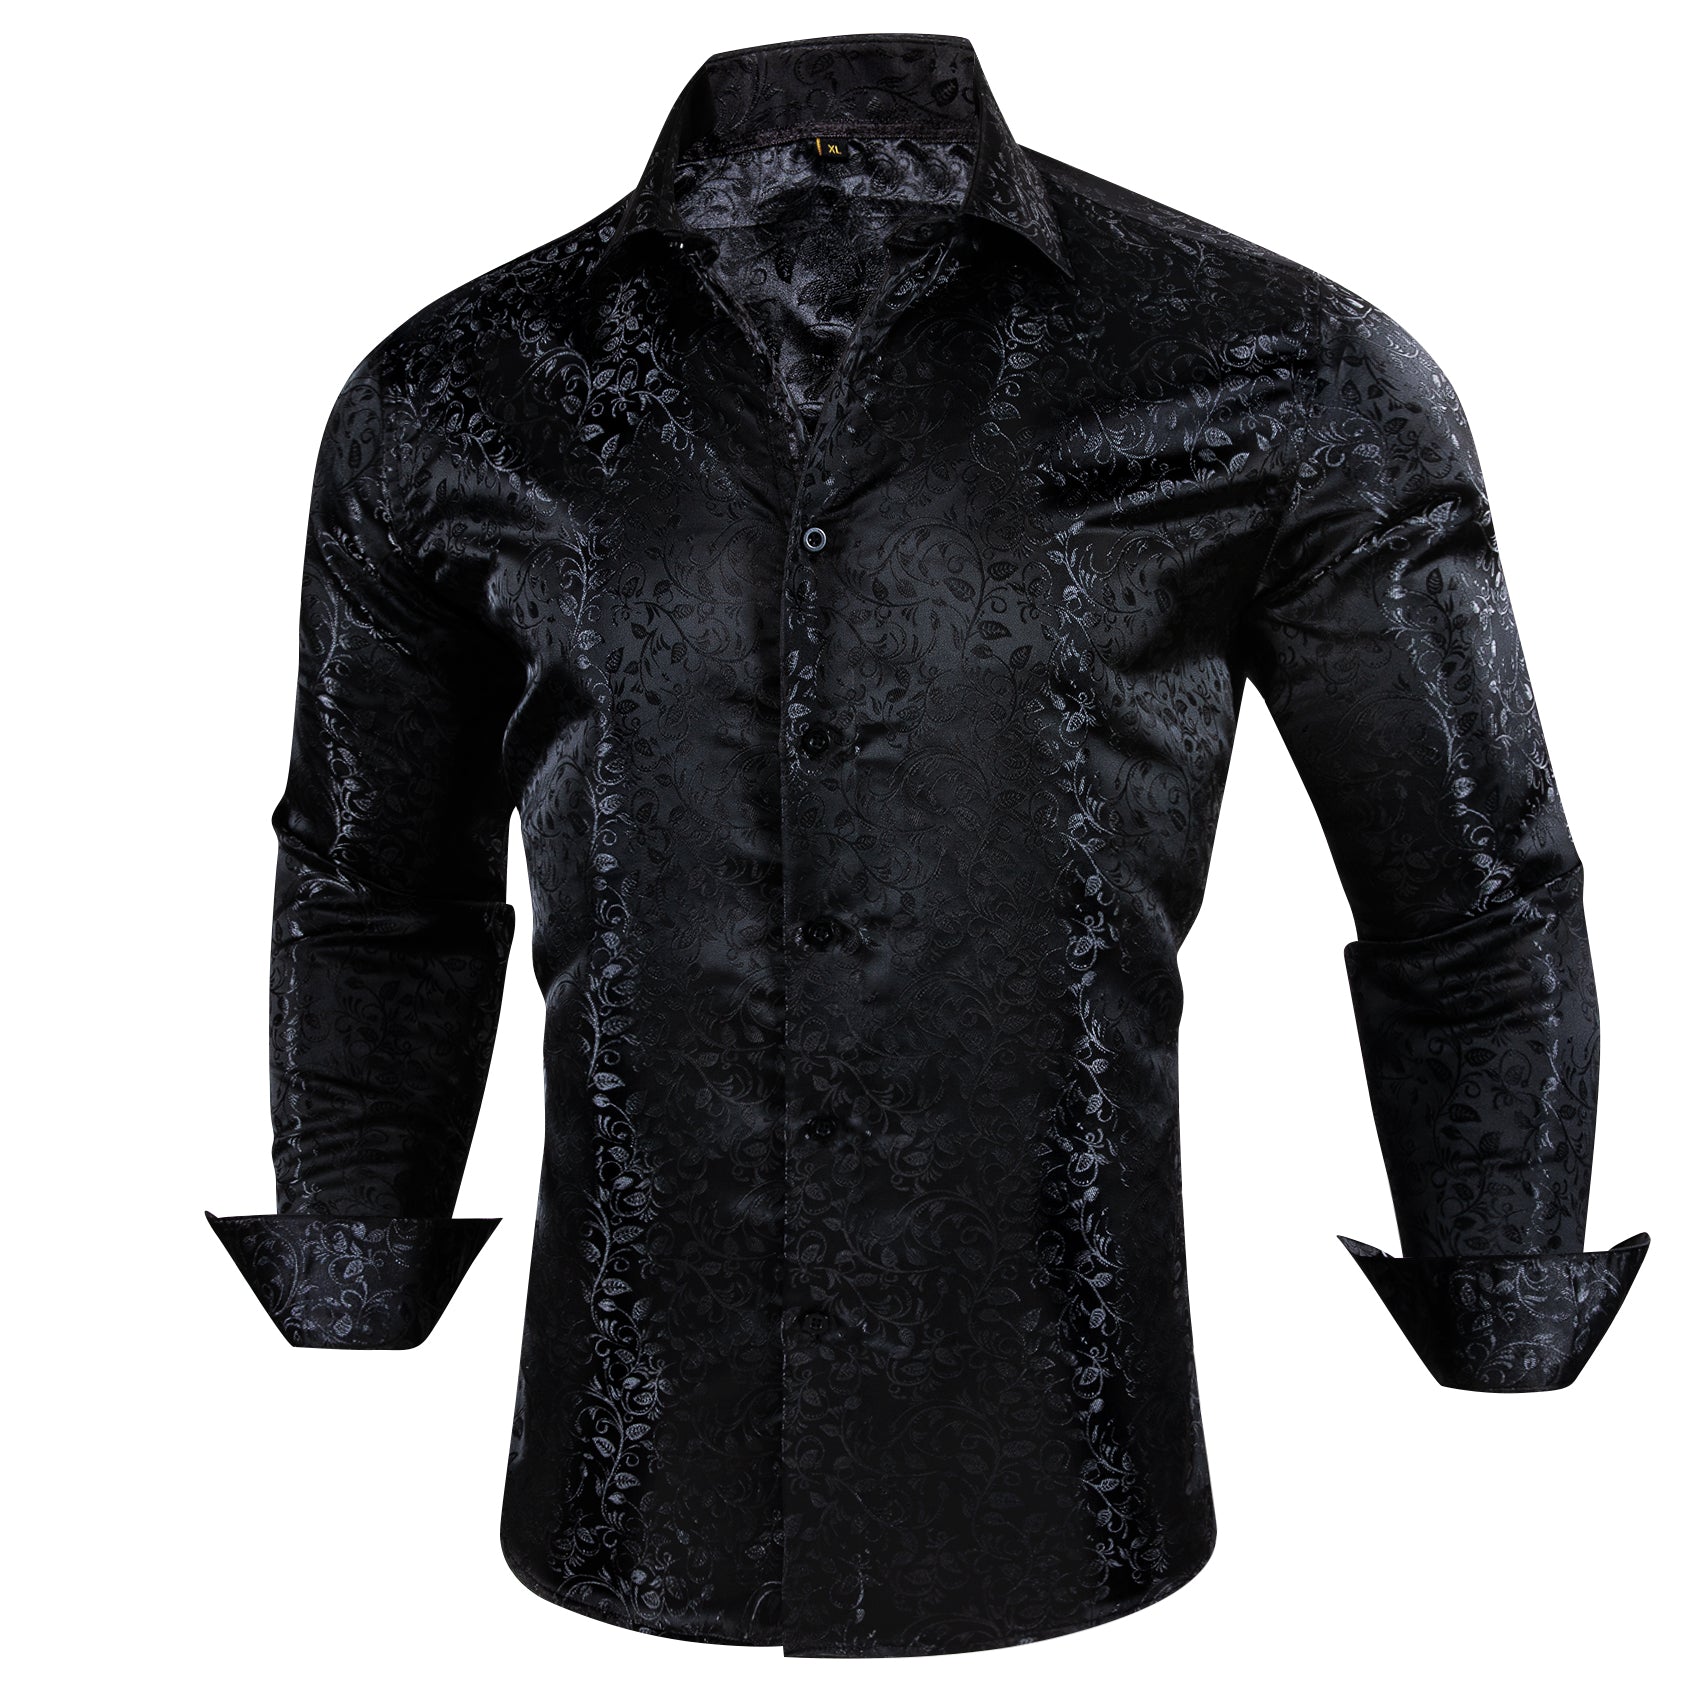 Barry.wang Luxury Black Leaves Floral Silk Shirt